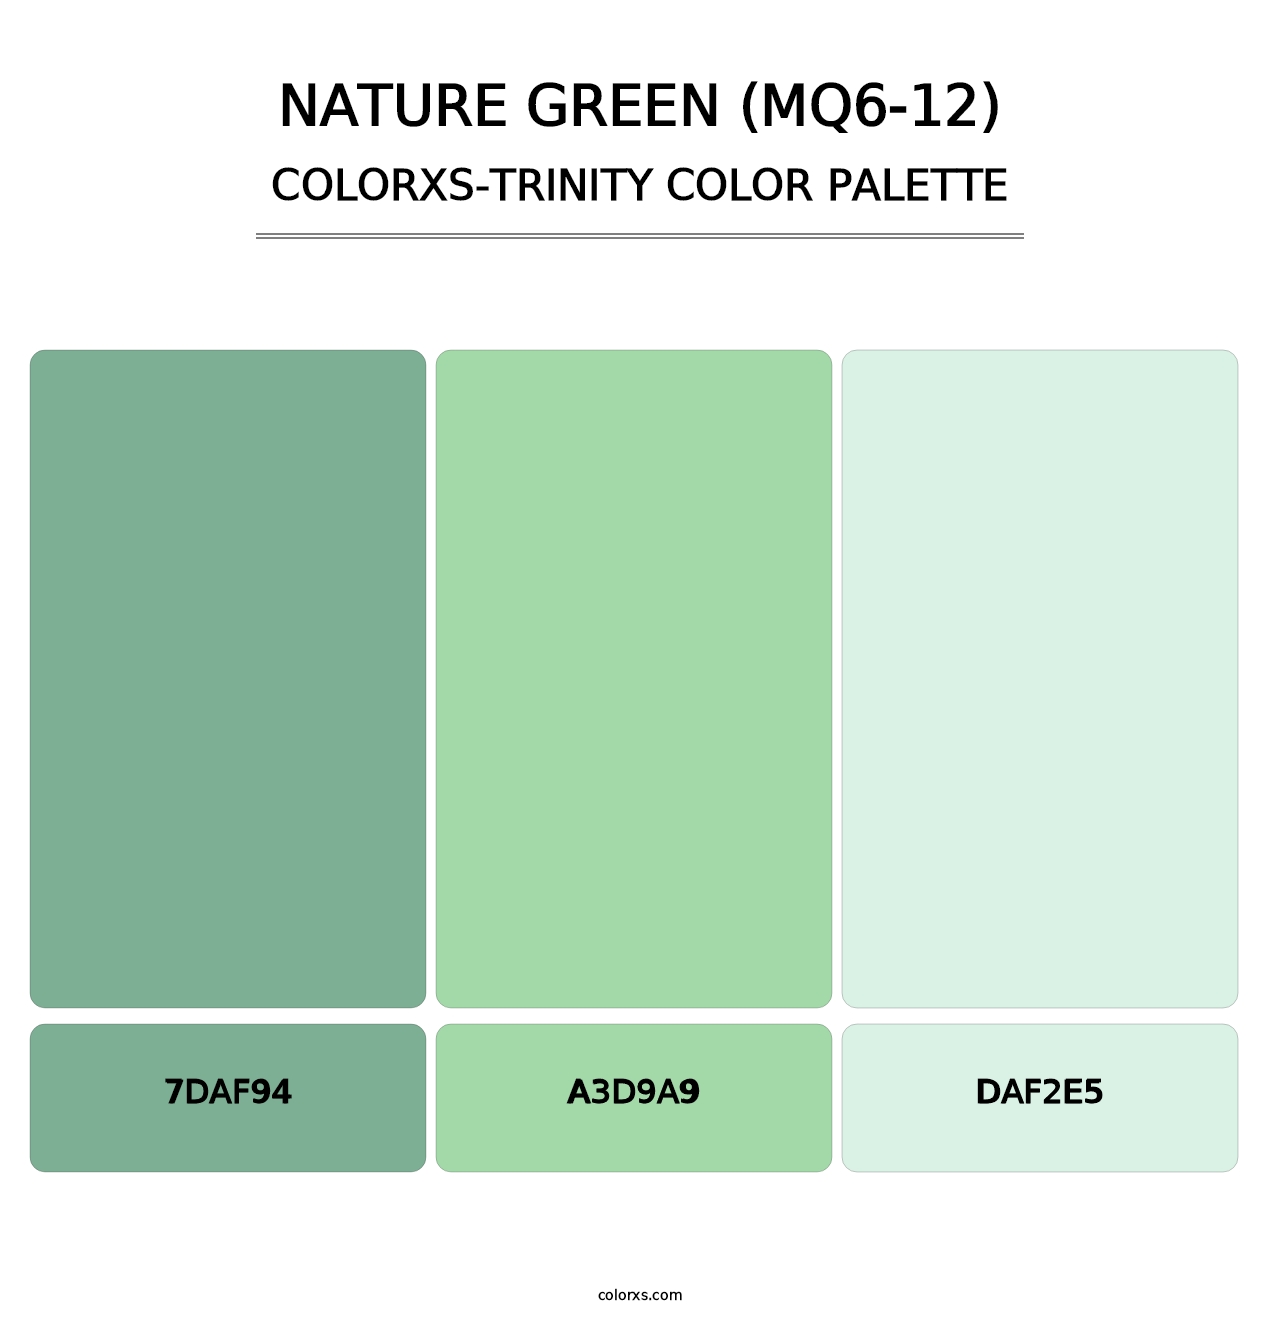 Nature Green (MQ6-12) - Colorxs Trinity Palette